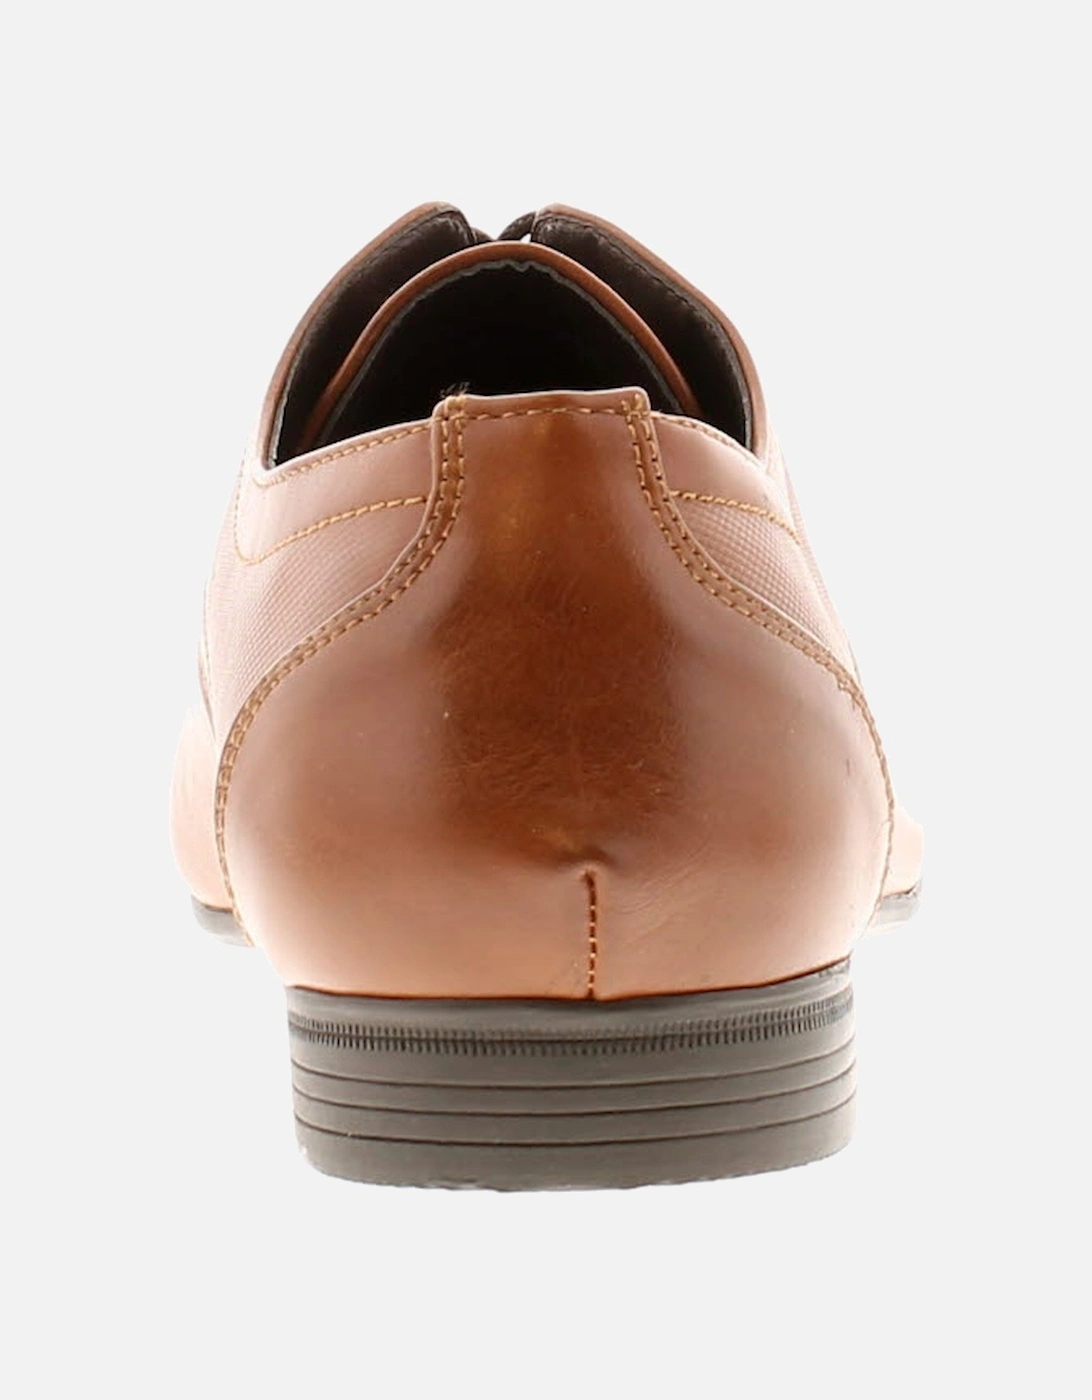 Mens Shoes Formal Smart Kewi Lace Up tan UK Size